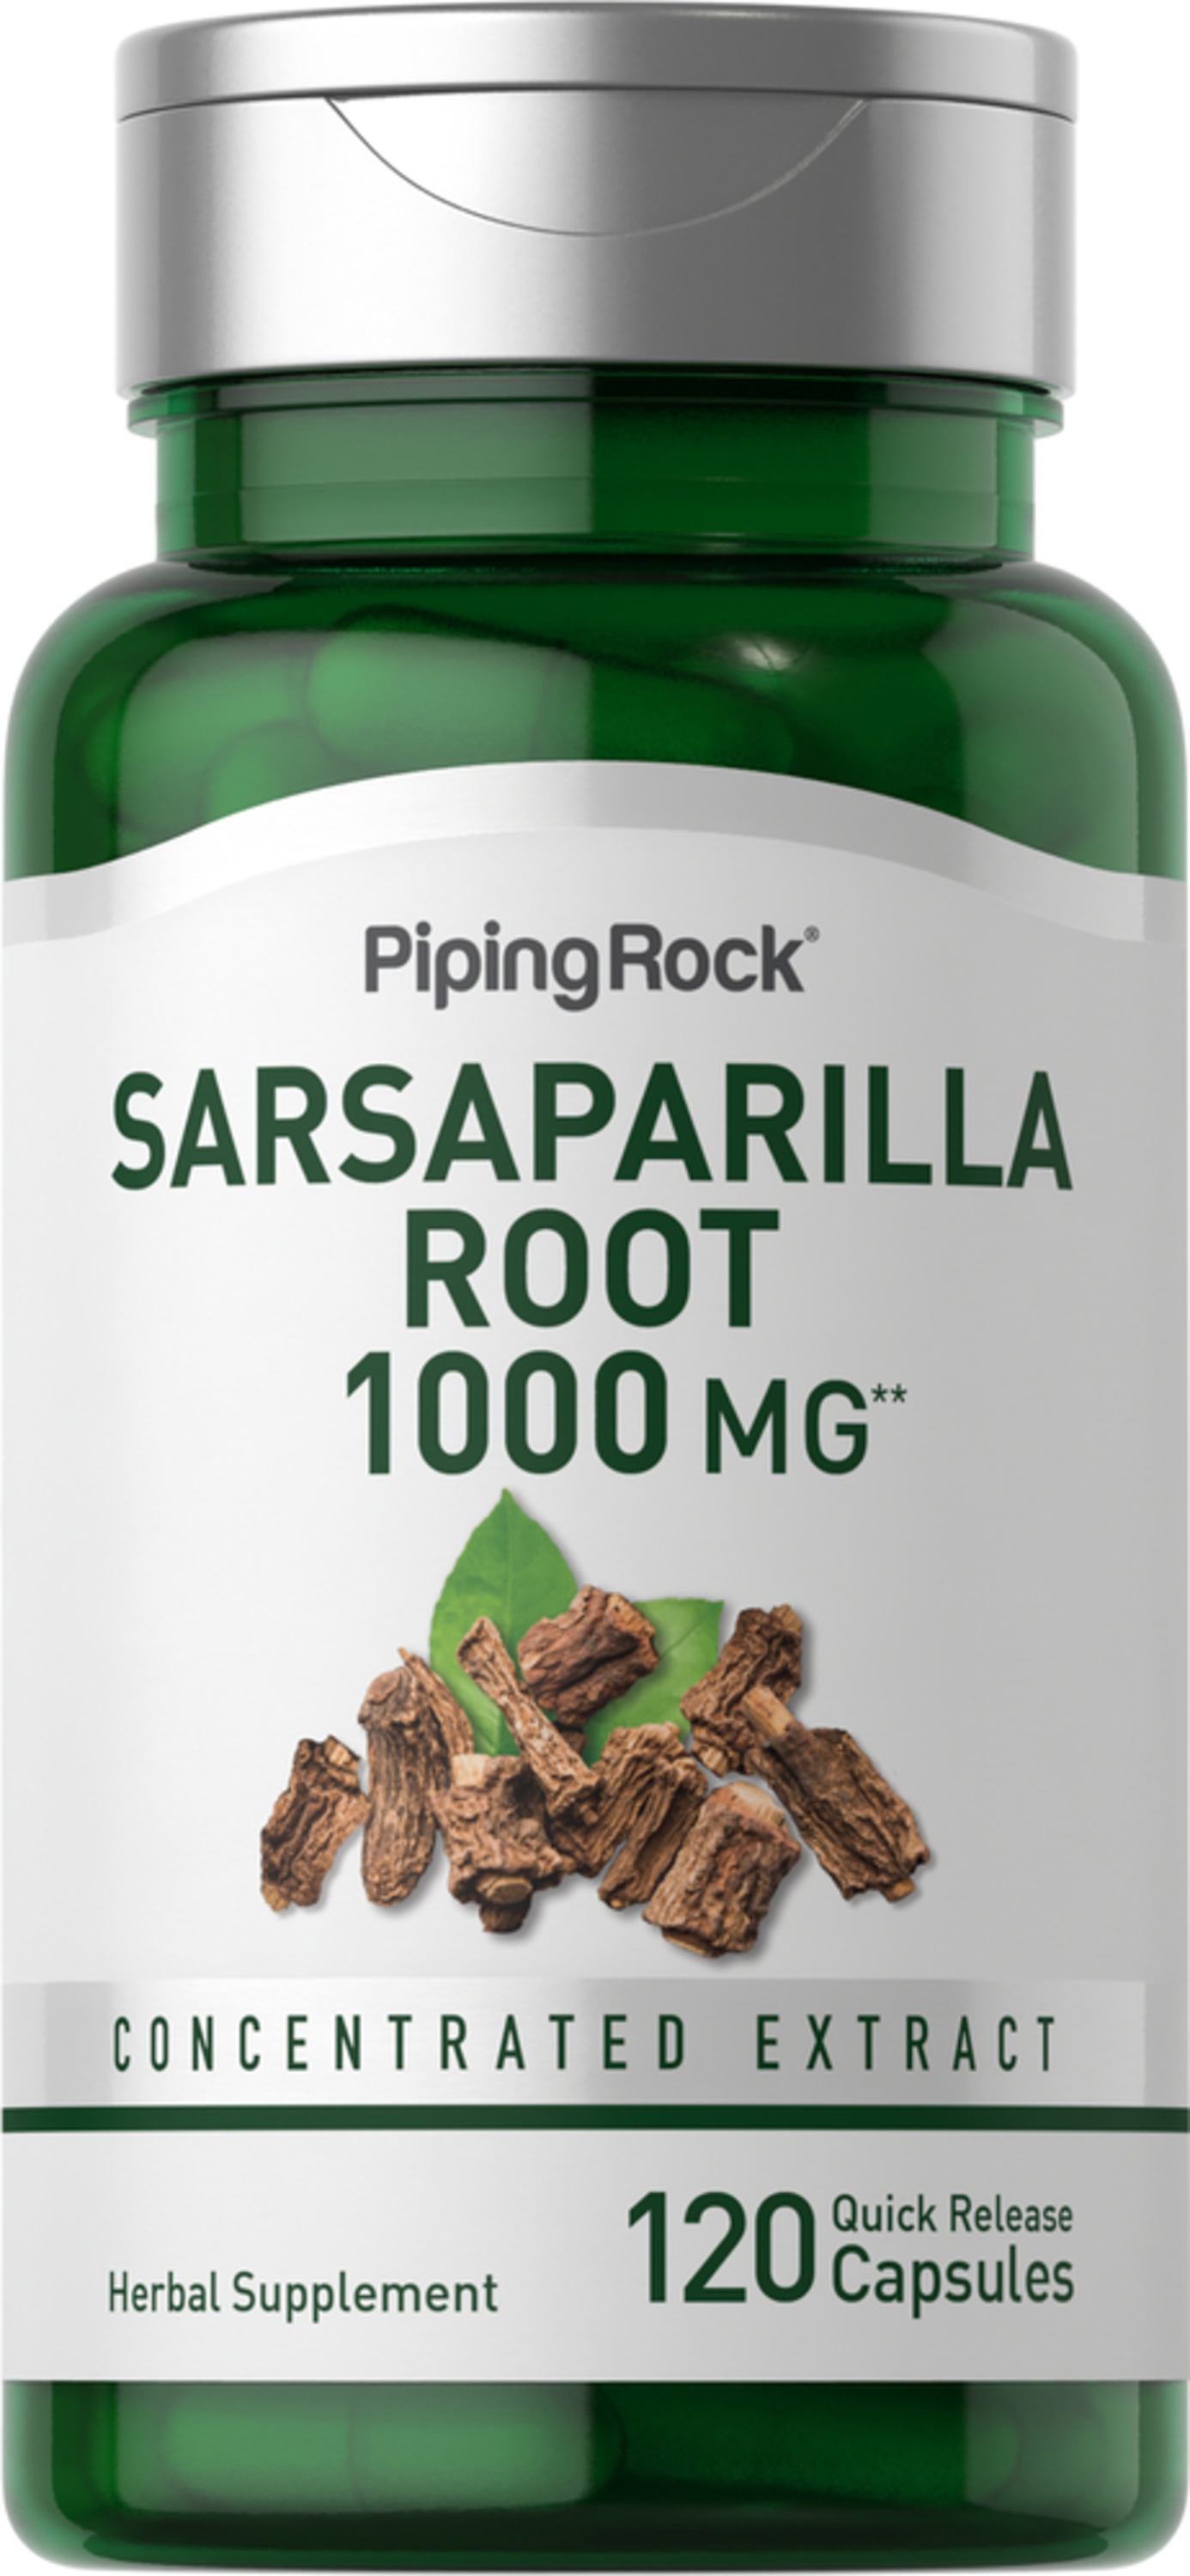 Sarsaparilla root suppleent g capsules health products